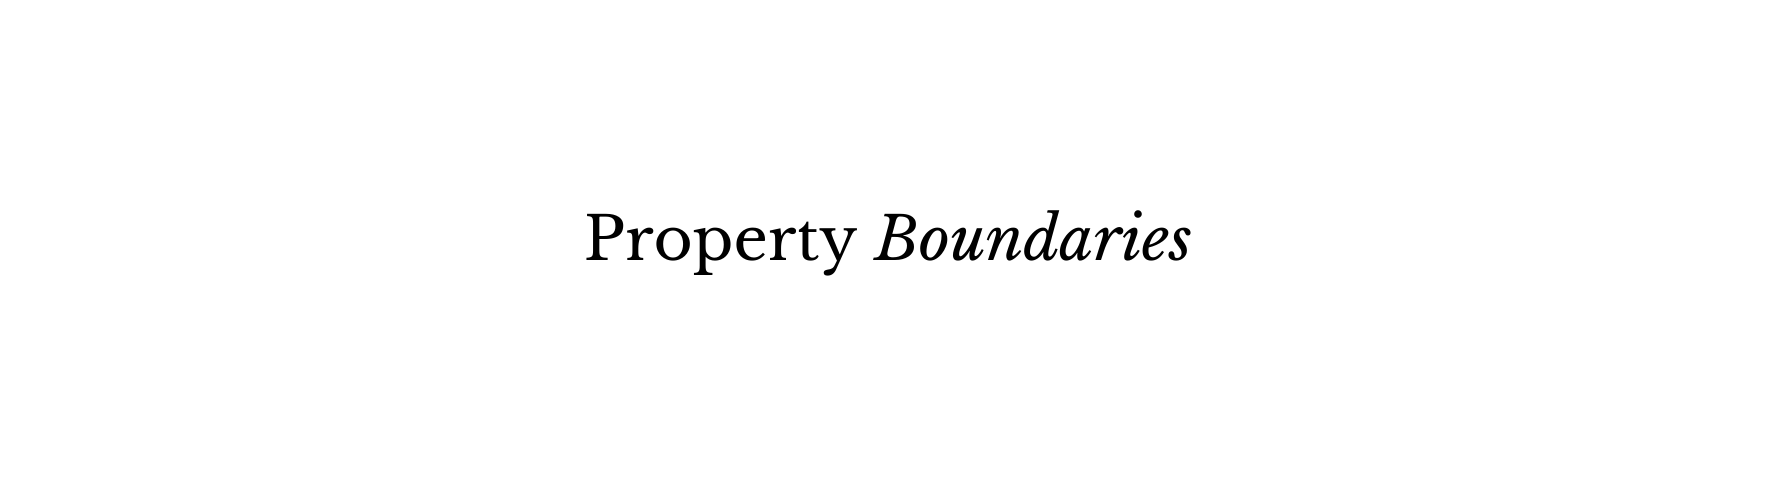 Property Boundaries